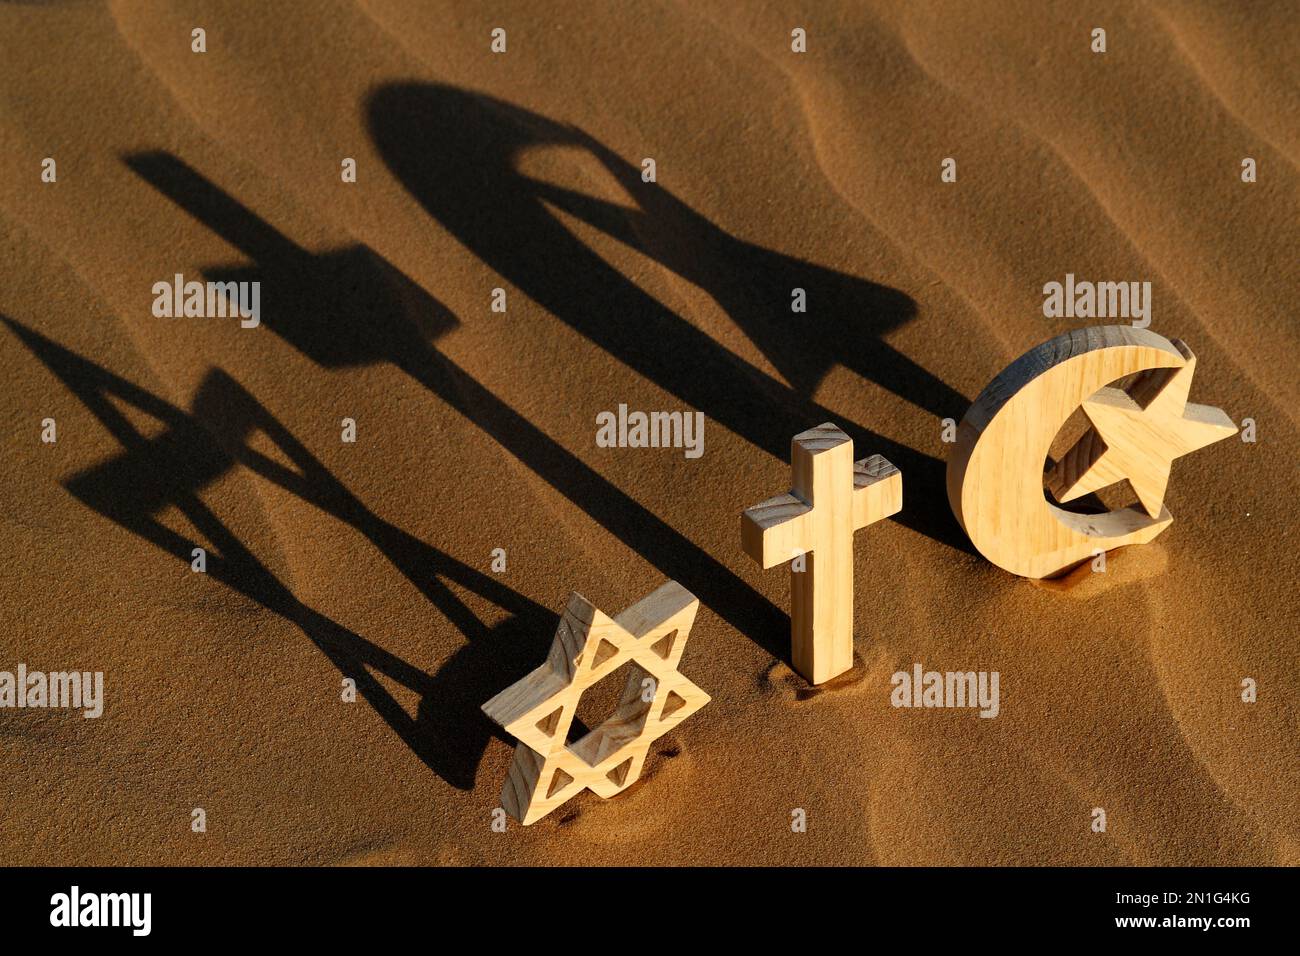 Religious symbols of Catholicism, Islam, Judaism, interreligious spirituality concept, United Arab Emirates, Middle East Stock Photo